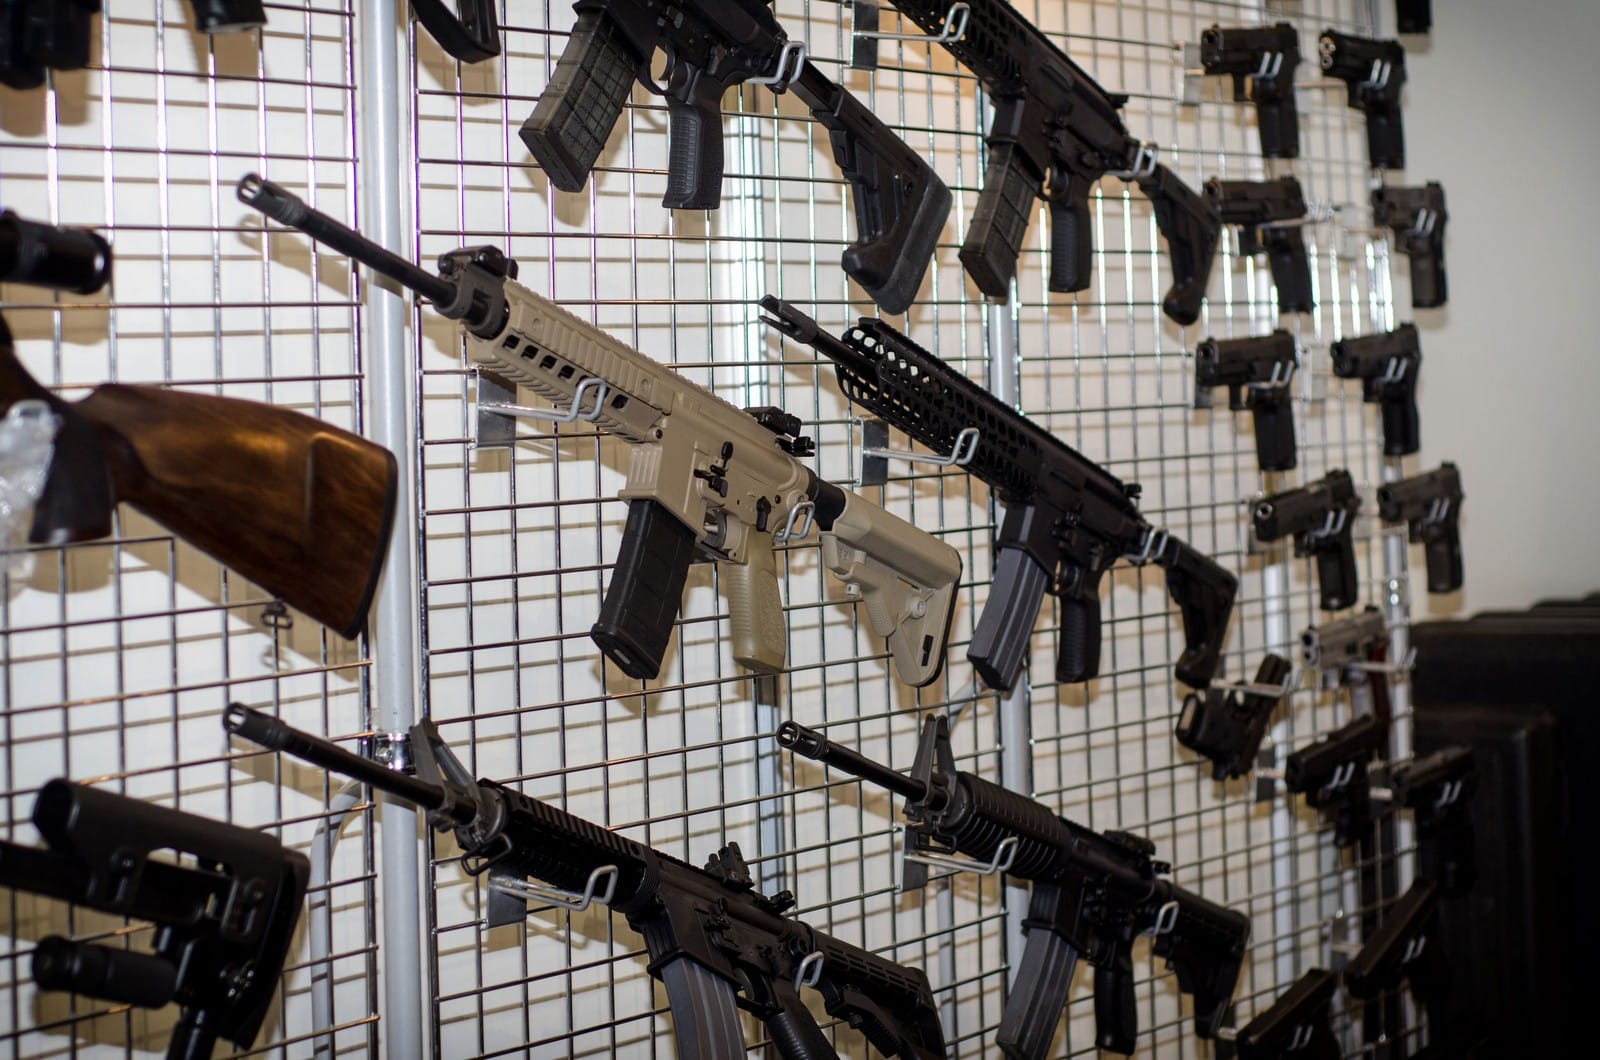 BREAKING: Federal Judge Overturns California #39 s quot Assault Weapons quot Ban